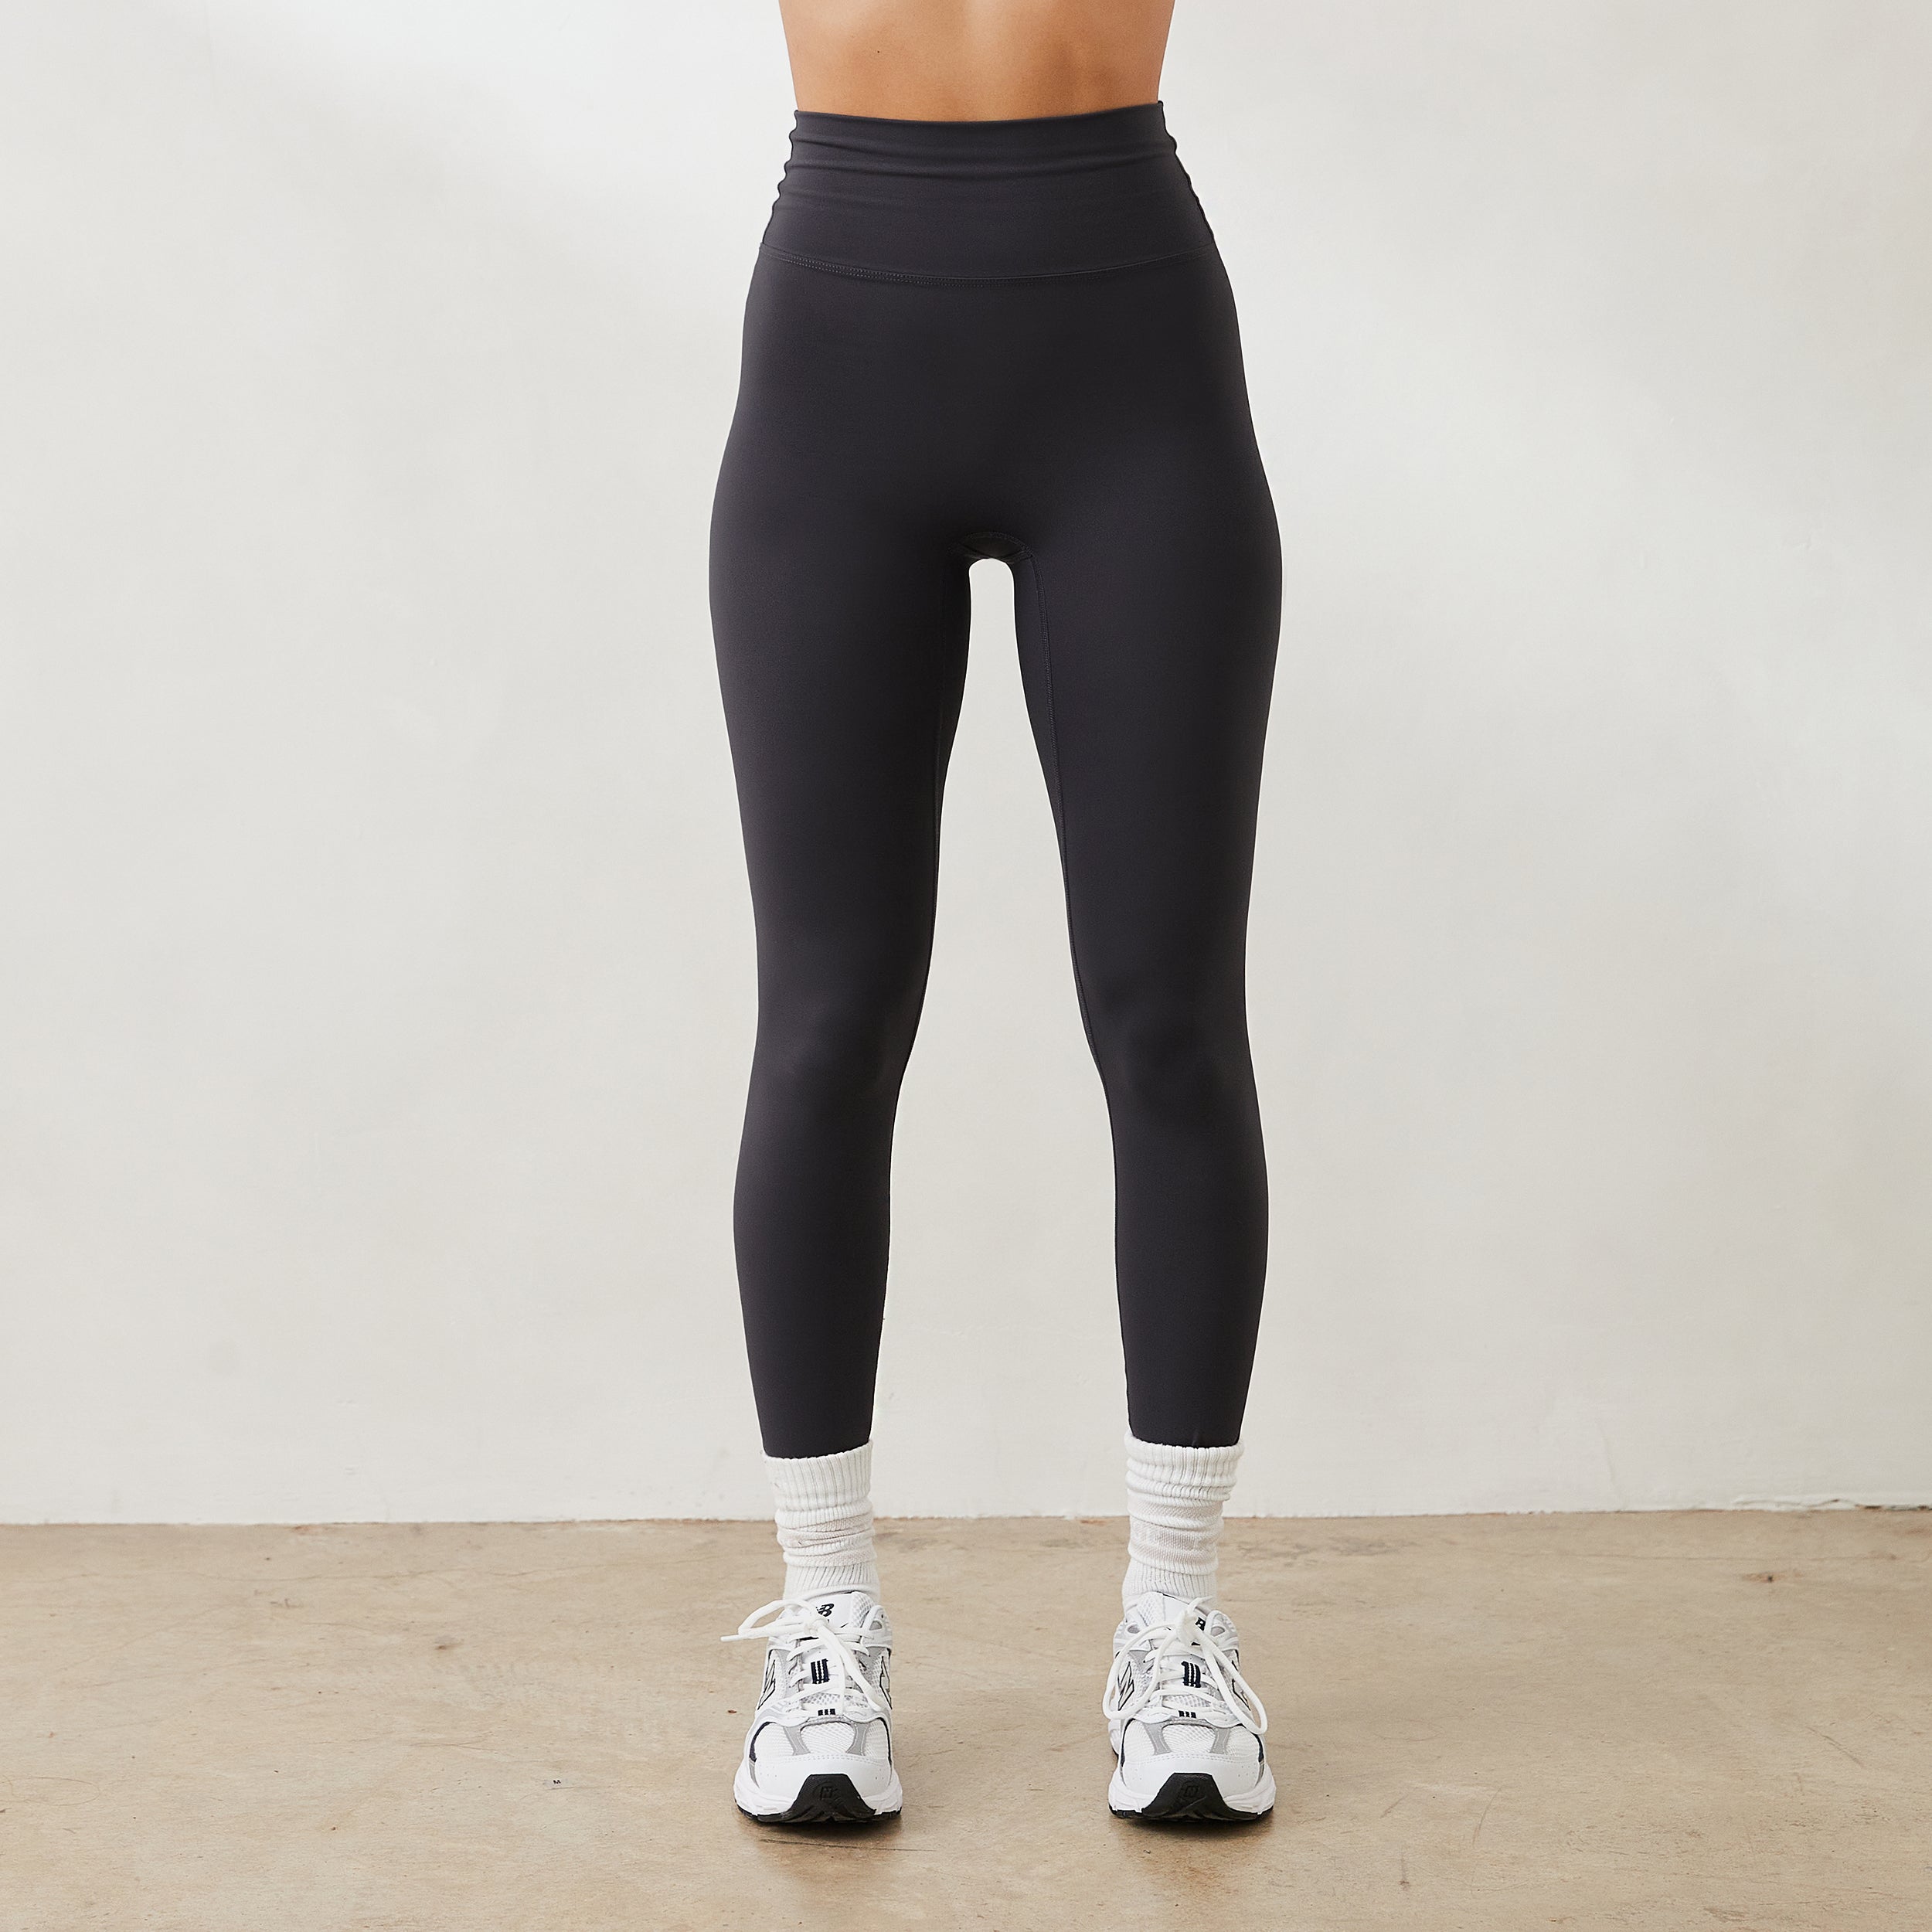 Buy Women's Leggings Petite Yoga Sportswear Online | Next UK